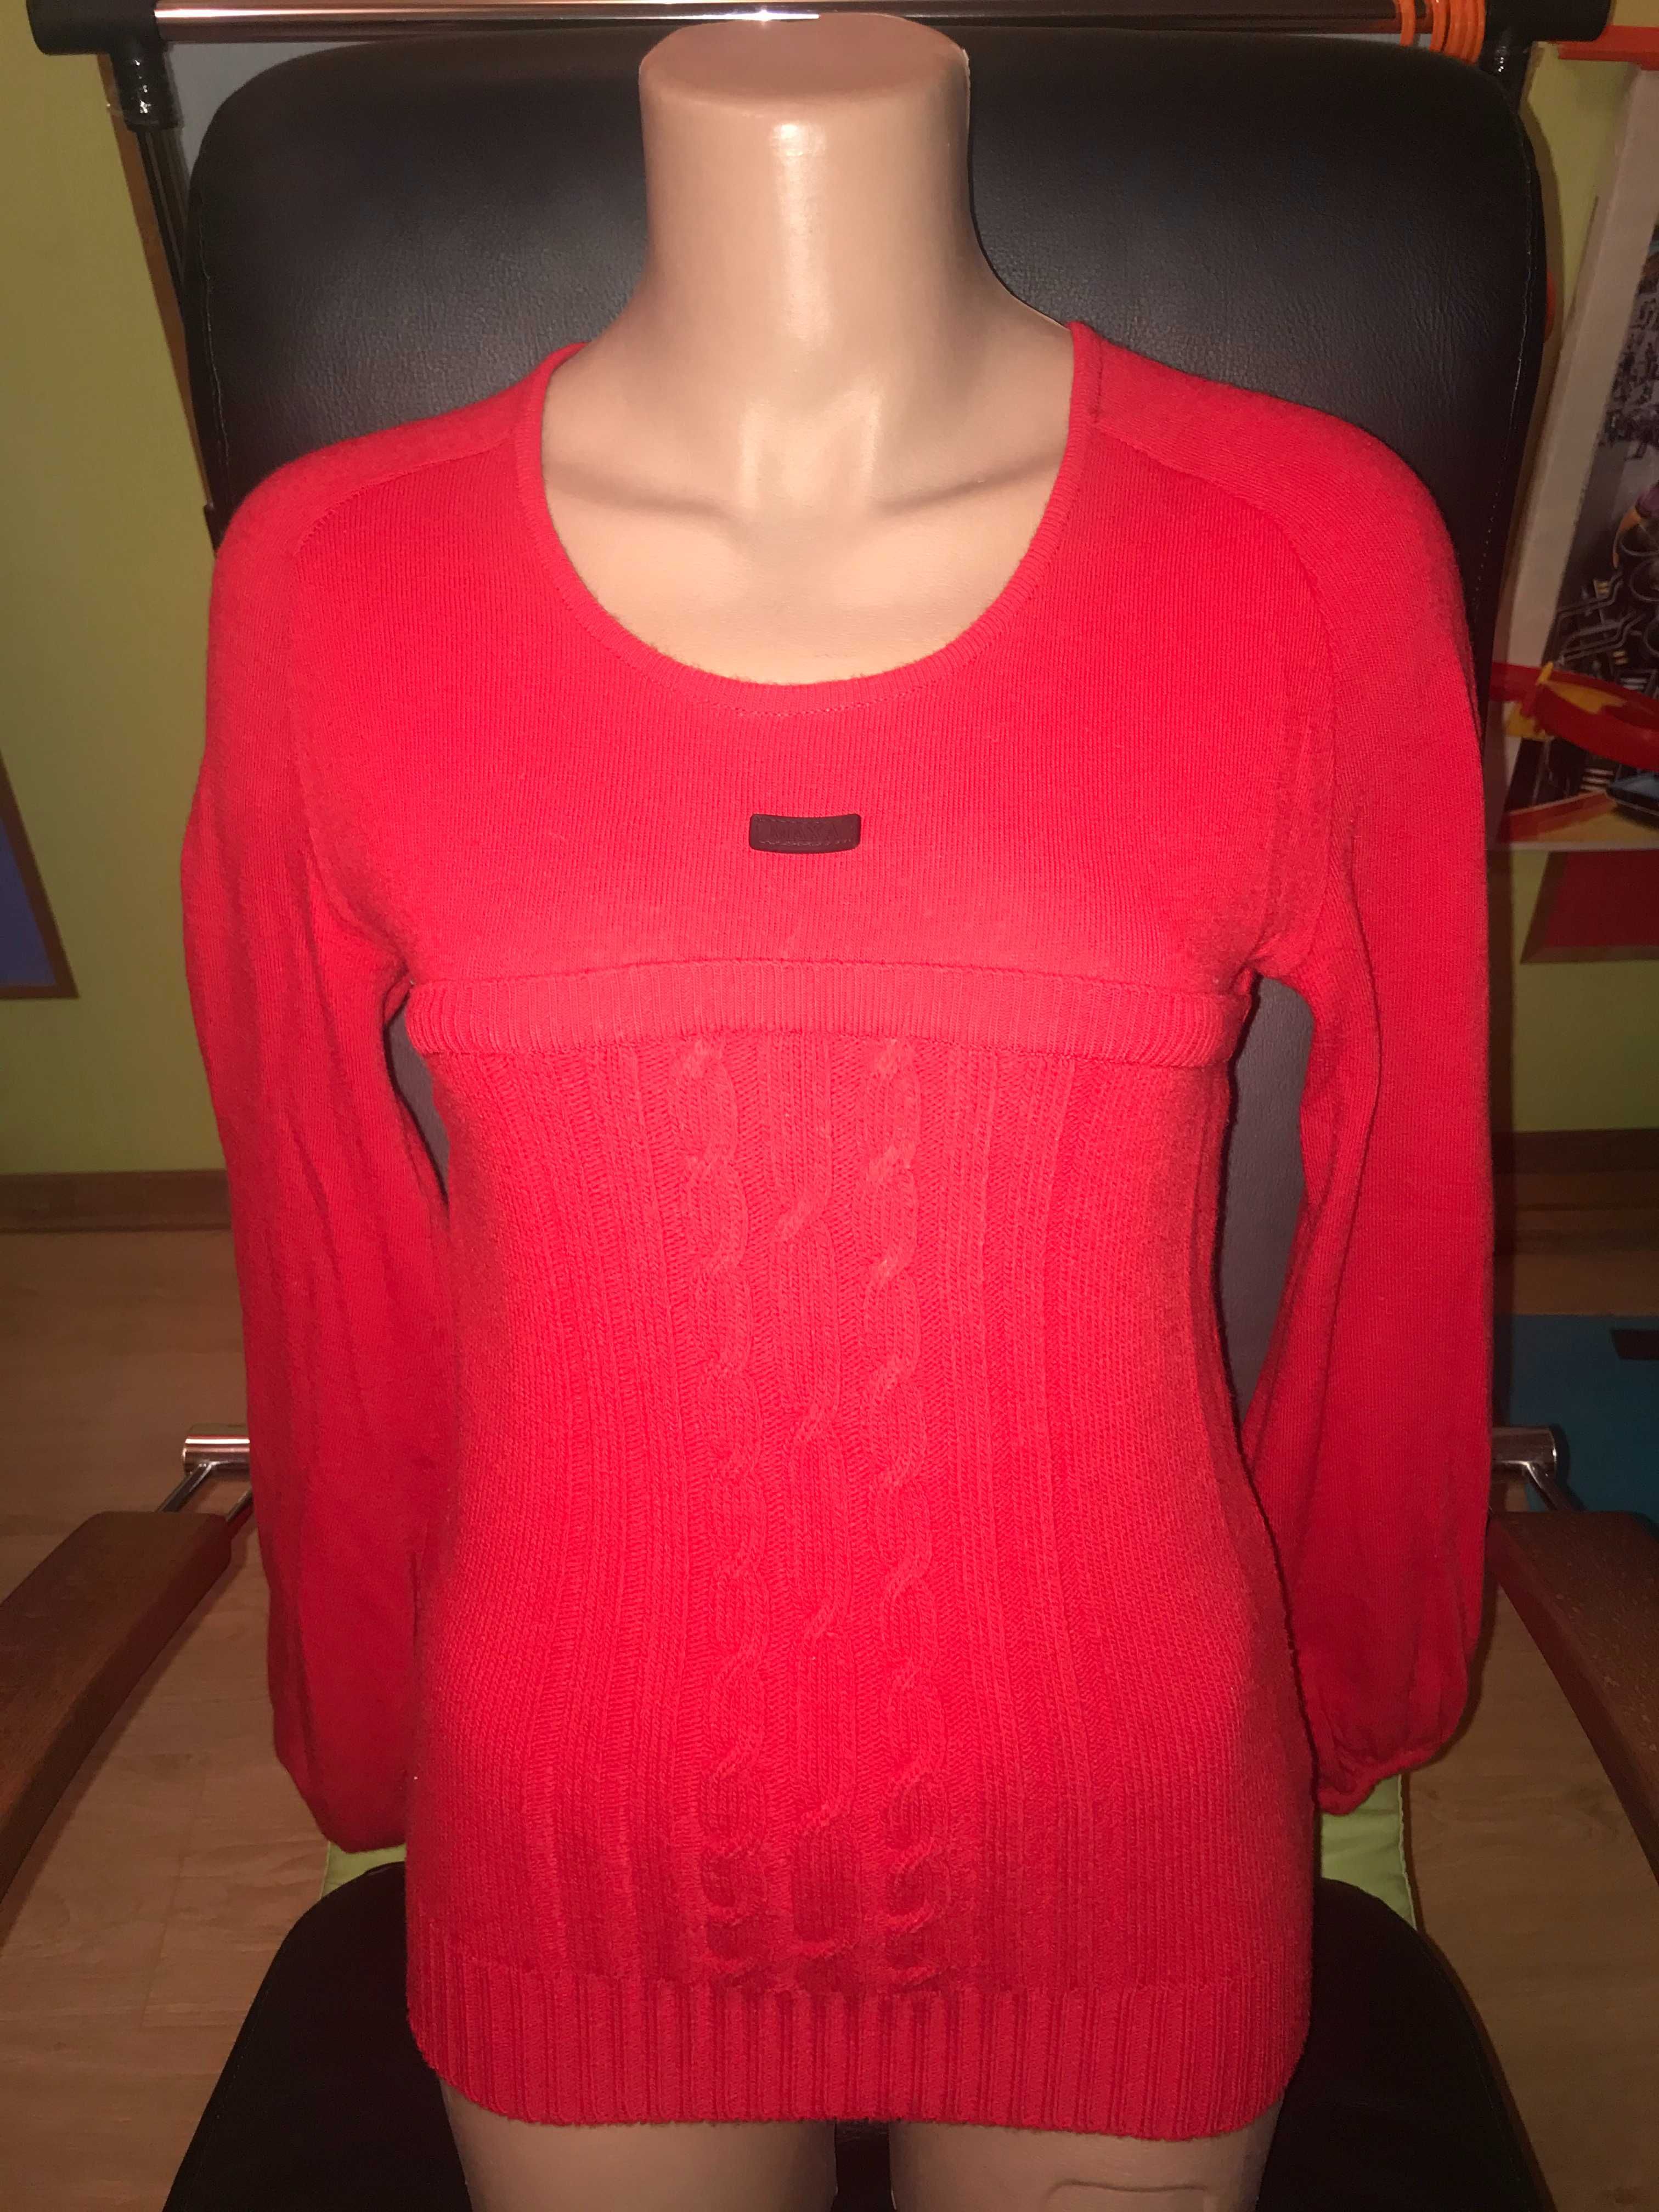 Красный свитер МАХА. Размер S-M.